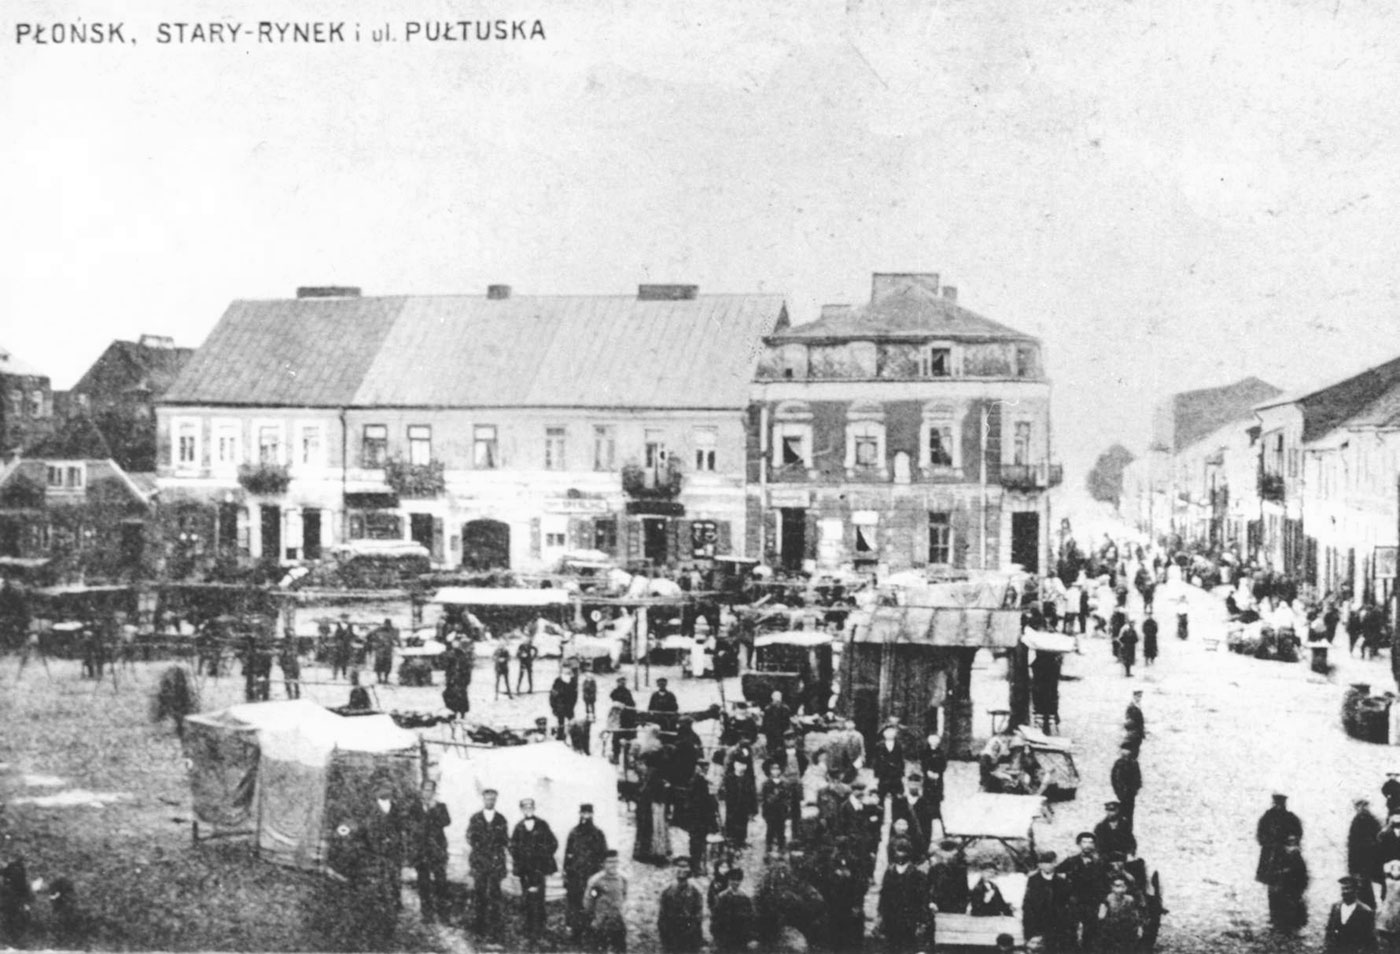 Plonsk, the old market square on Pułtuska Street